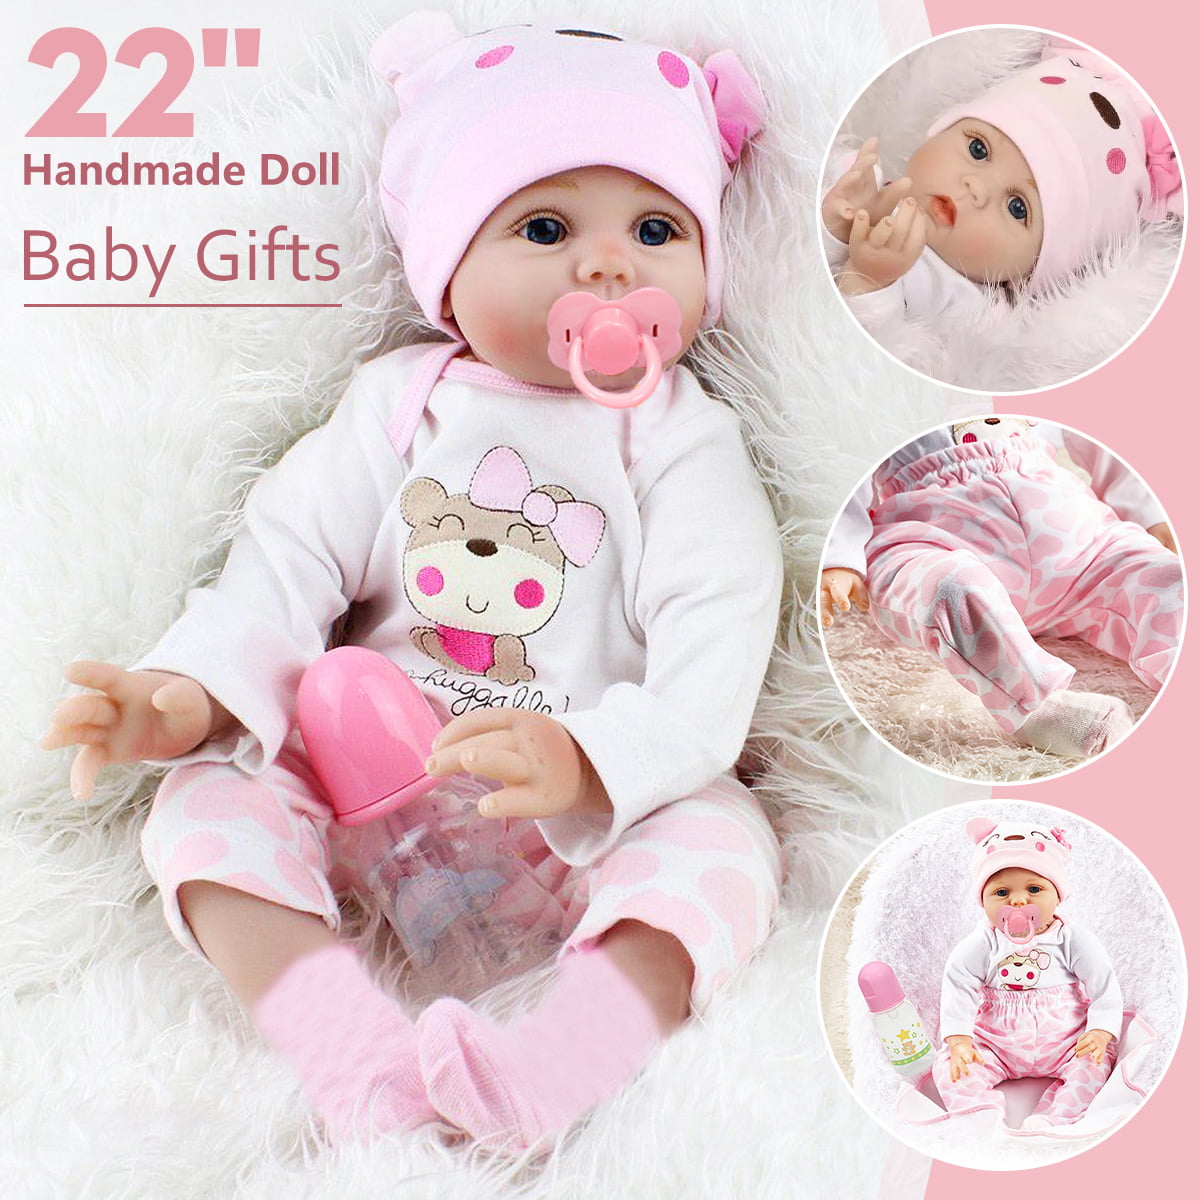 20/" Soft Silicone Vinyl Toddler Reborn Baby Girl Doll Lifelike Newborn Toys Gift